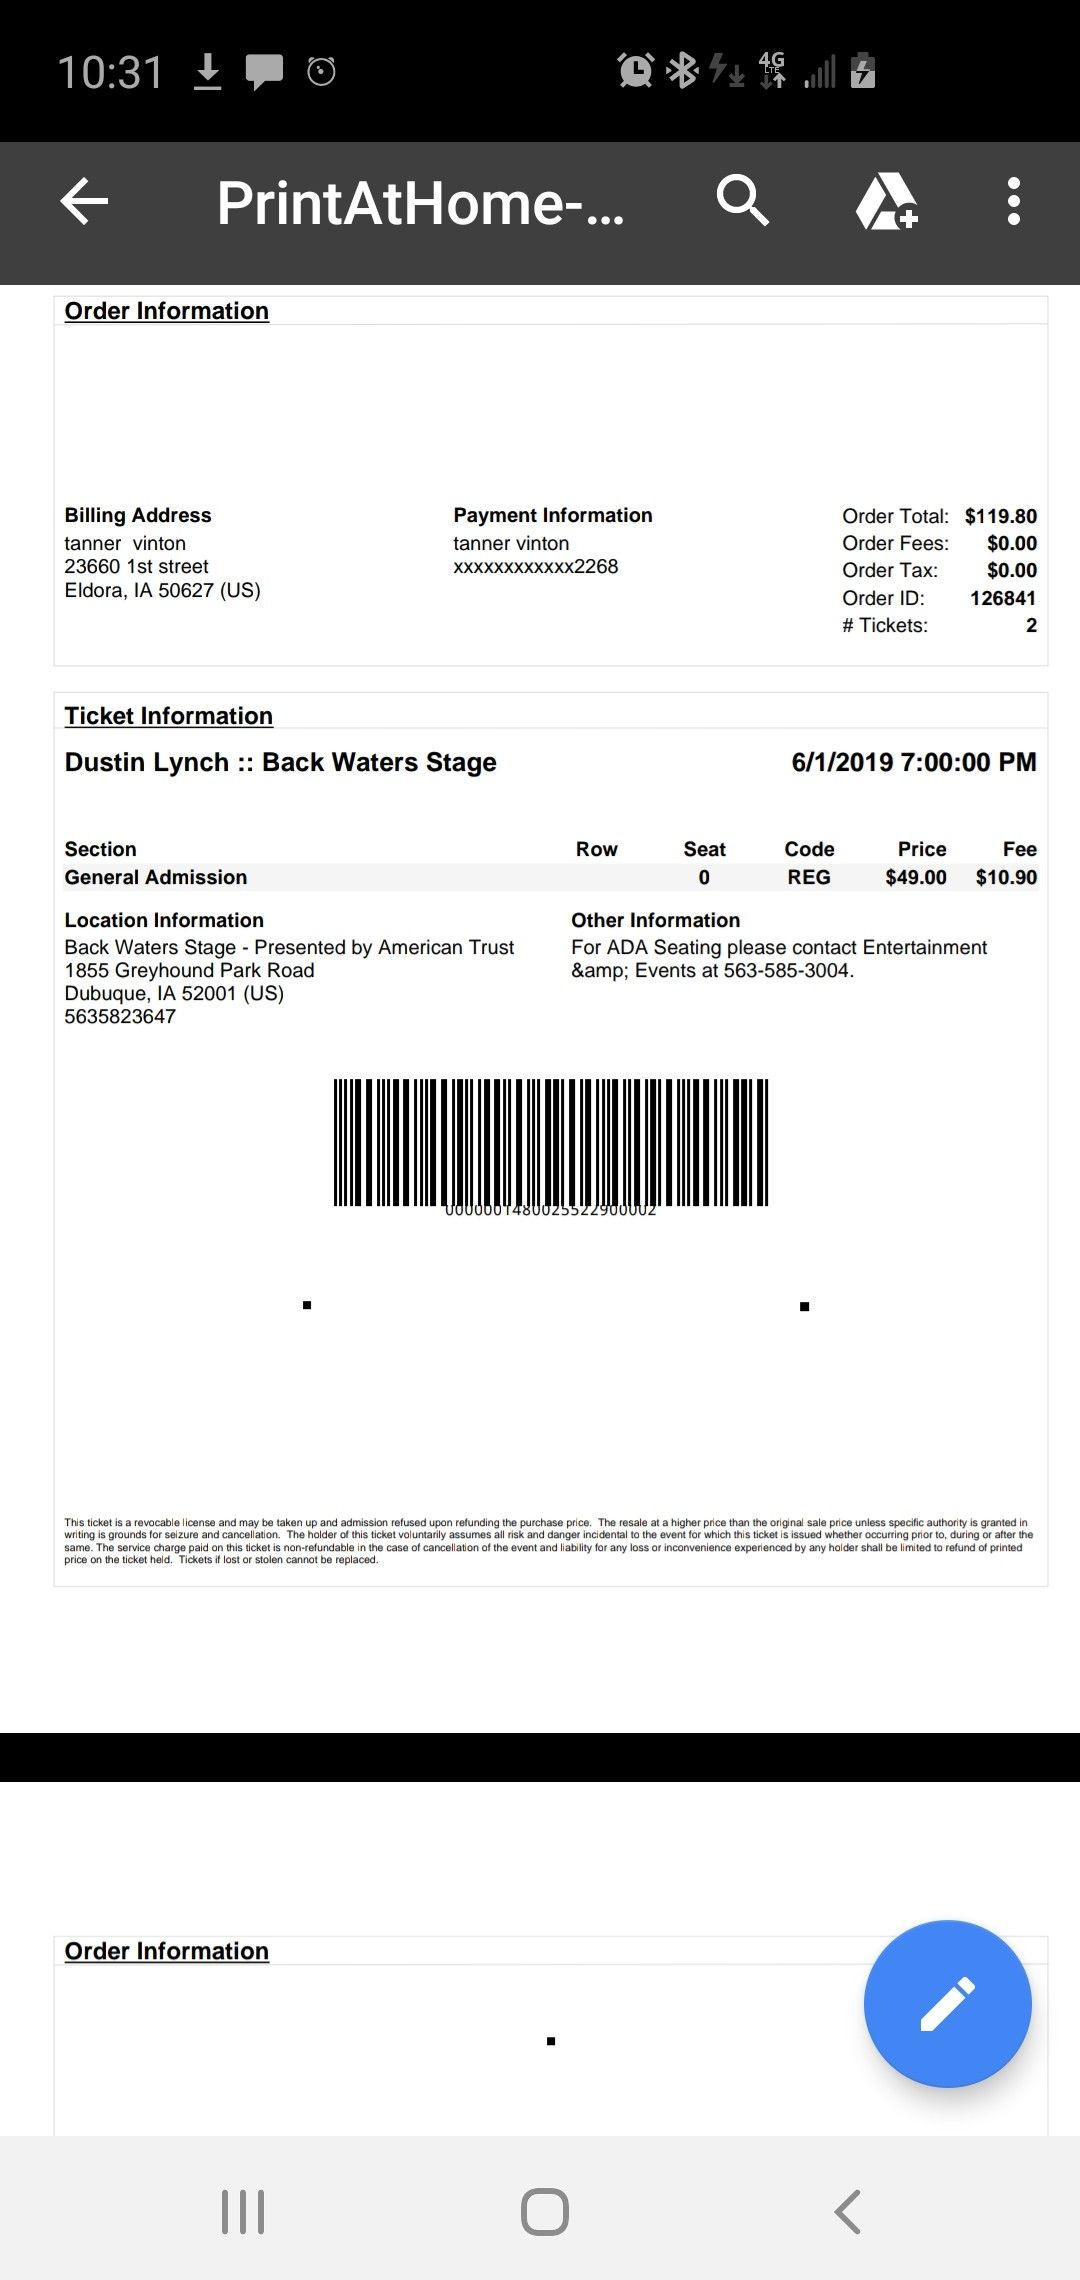 2 Dustin Lynch concert tickets